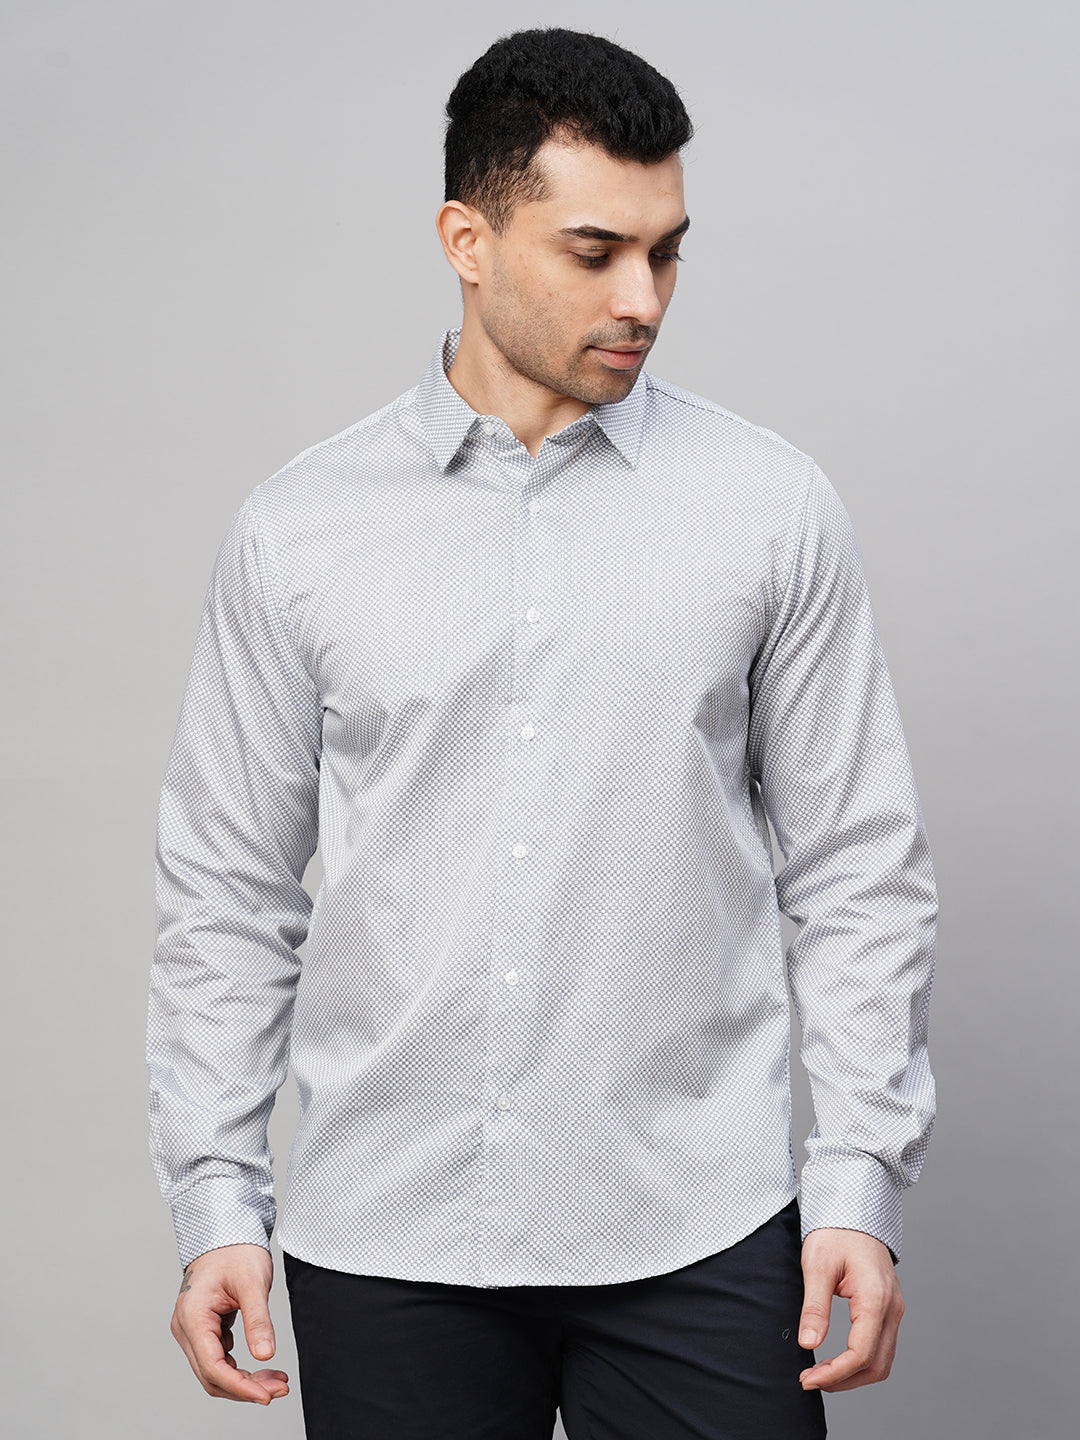 Men's White Cotton Slim Fit Printed Shirt